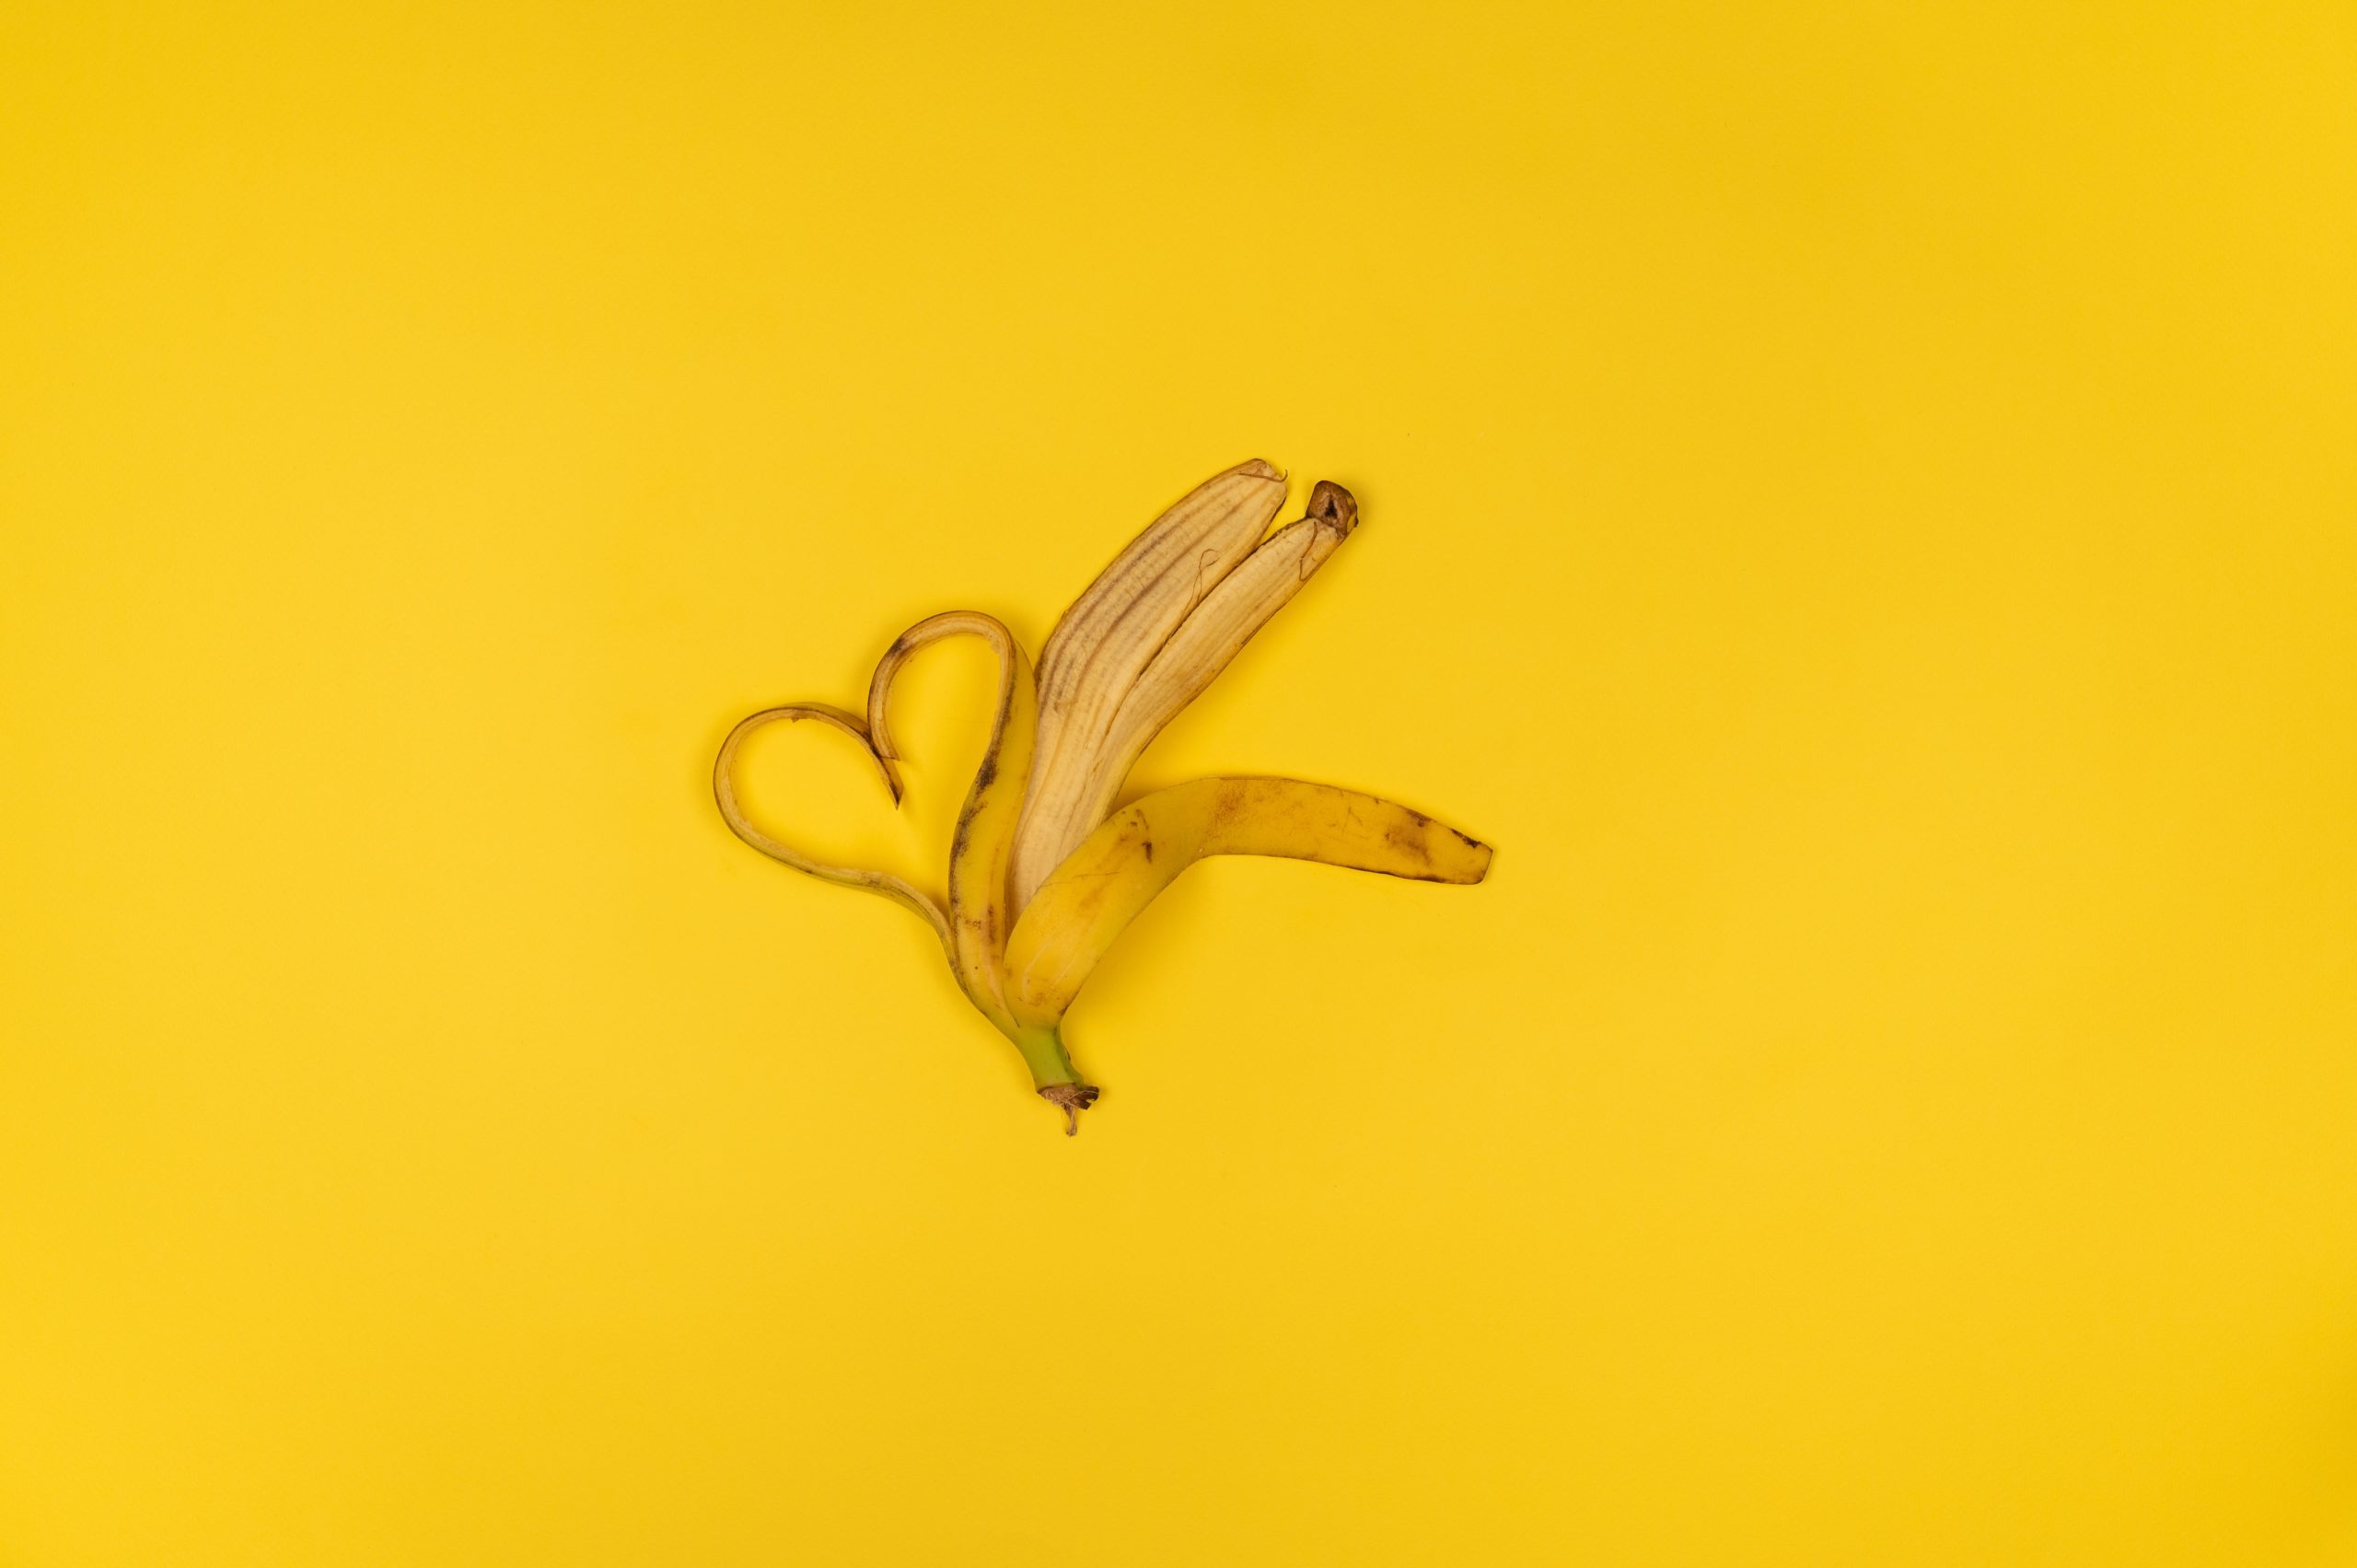 Can You Eat a Banana Peel